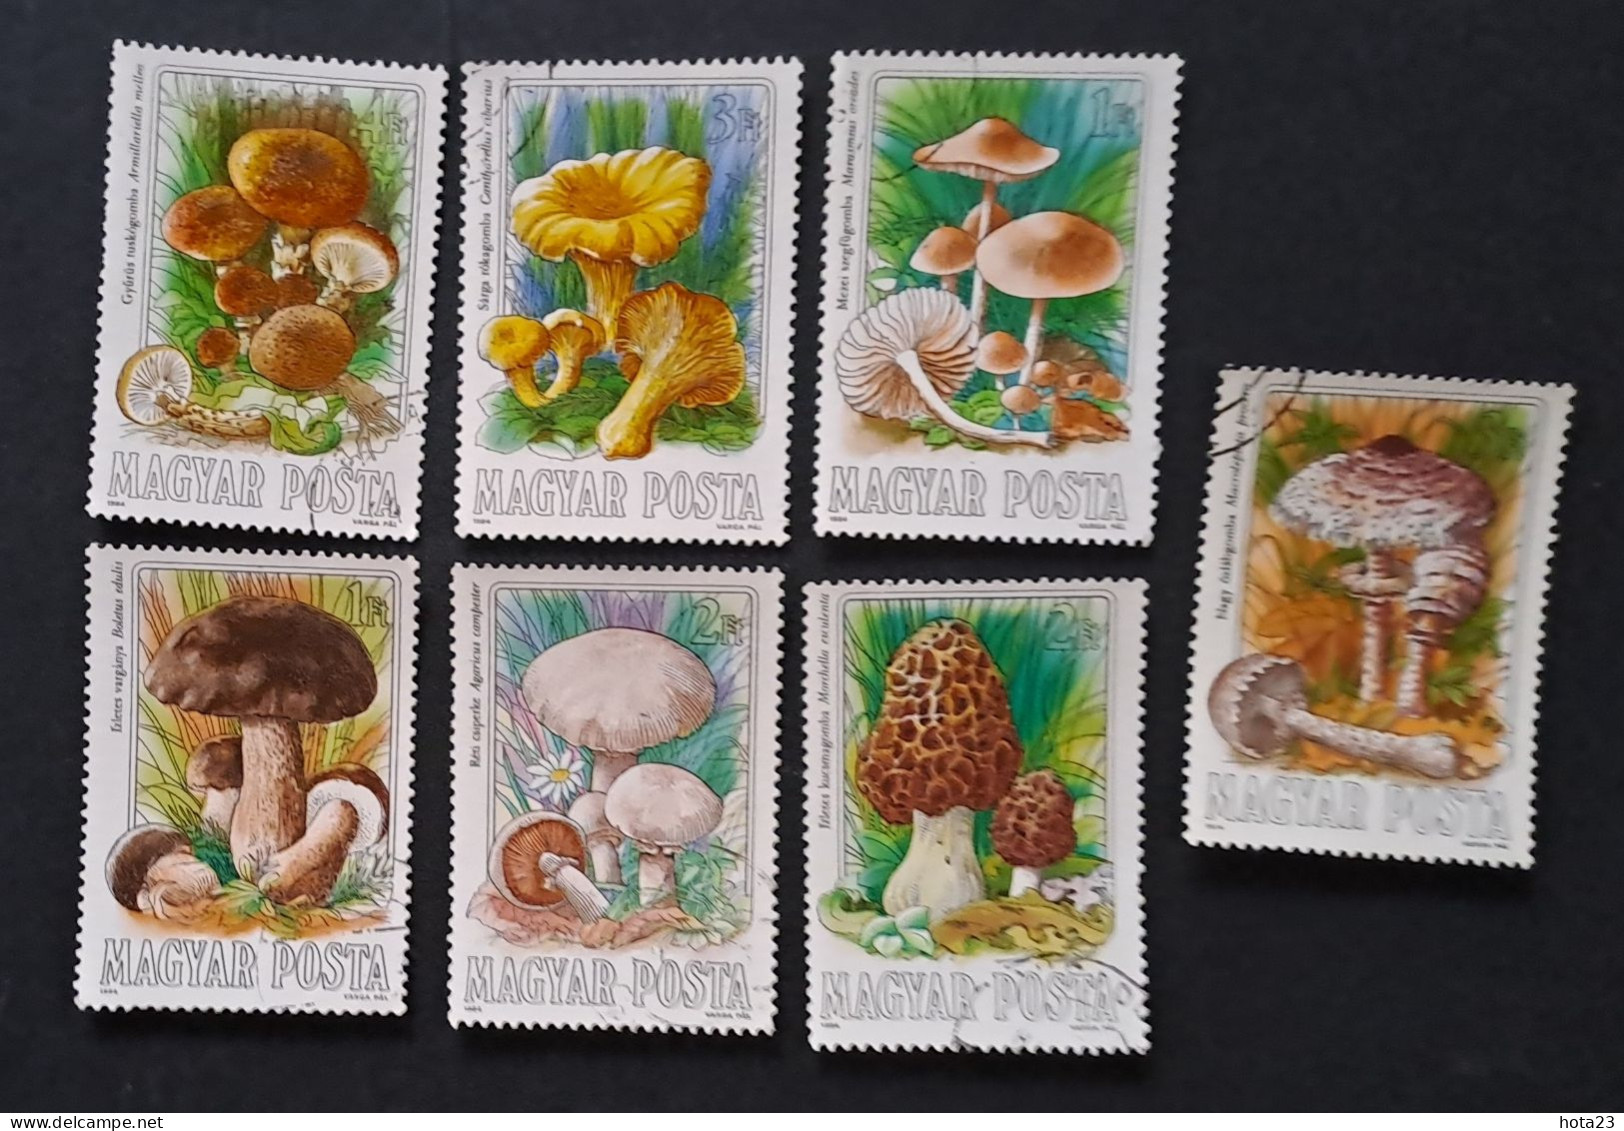 HUNGARY 1984 EDIBLE MUSHROOMS Mi3708-3714 Used Stamp Set - Champignons